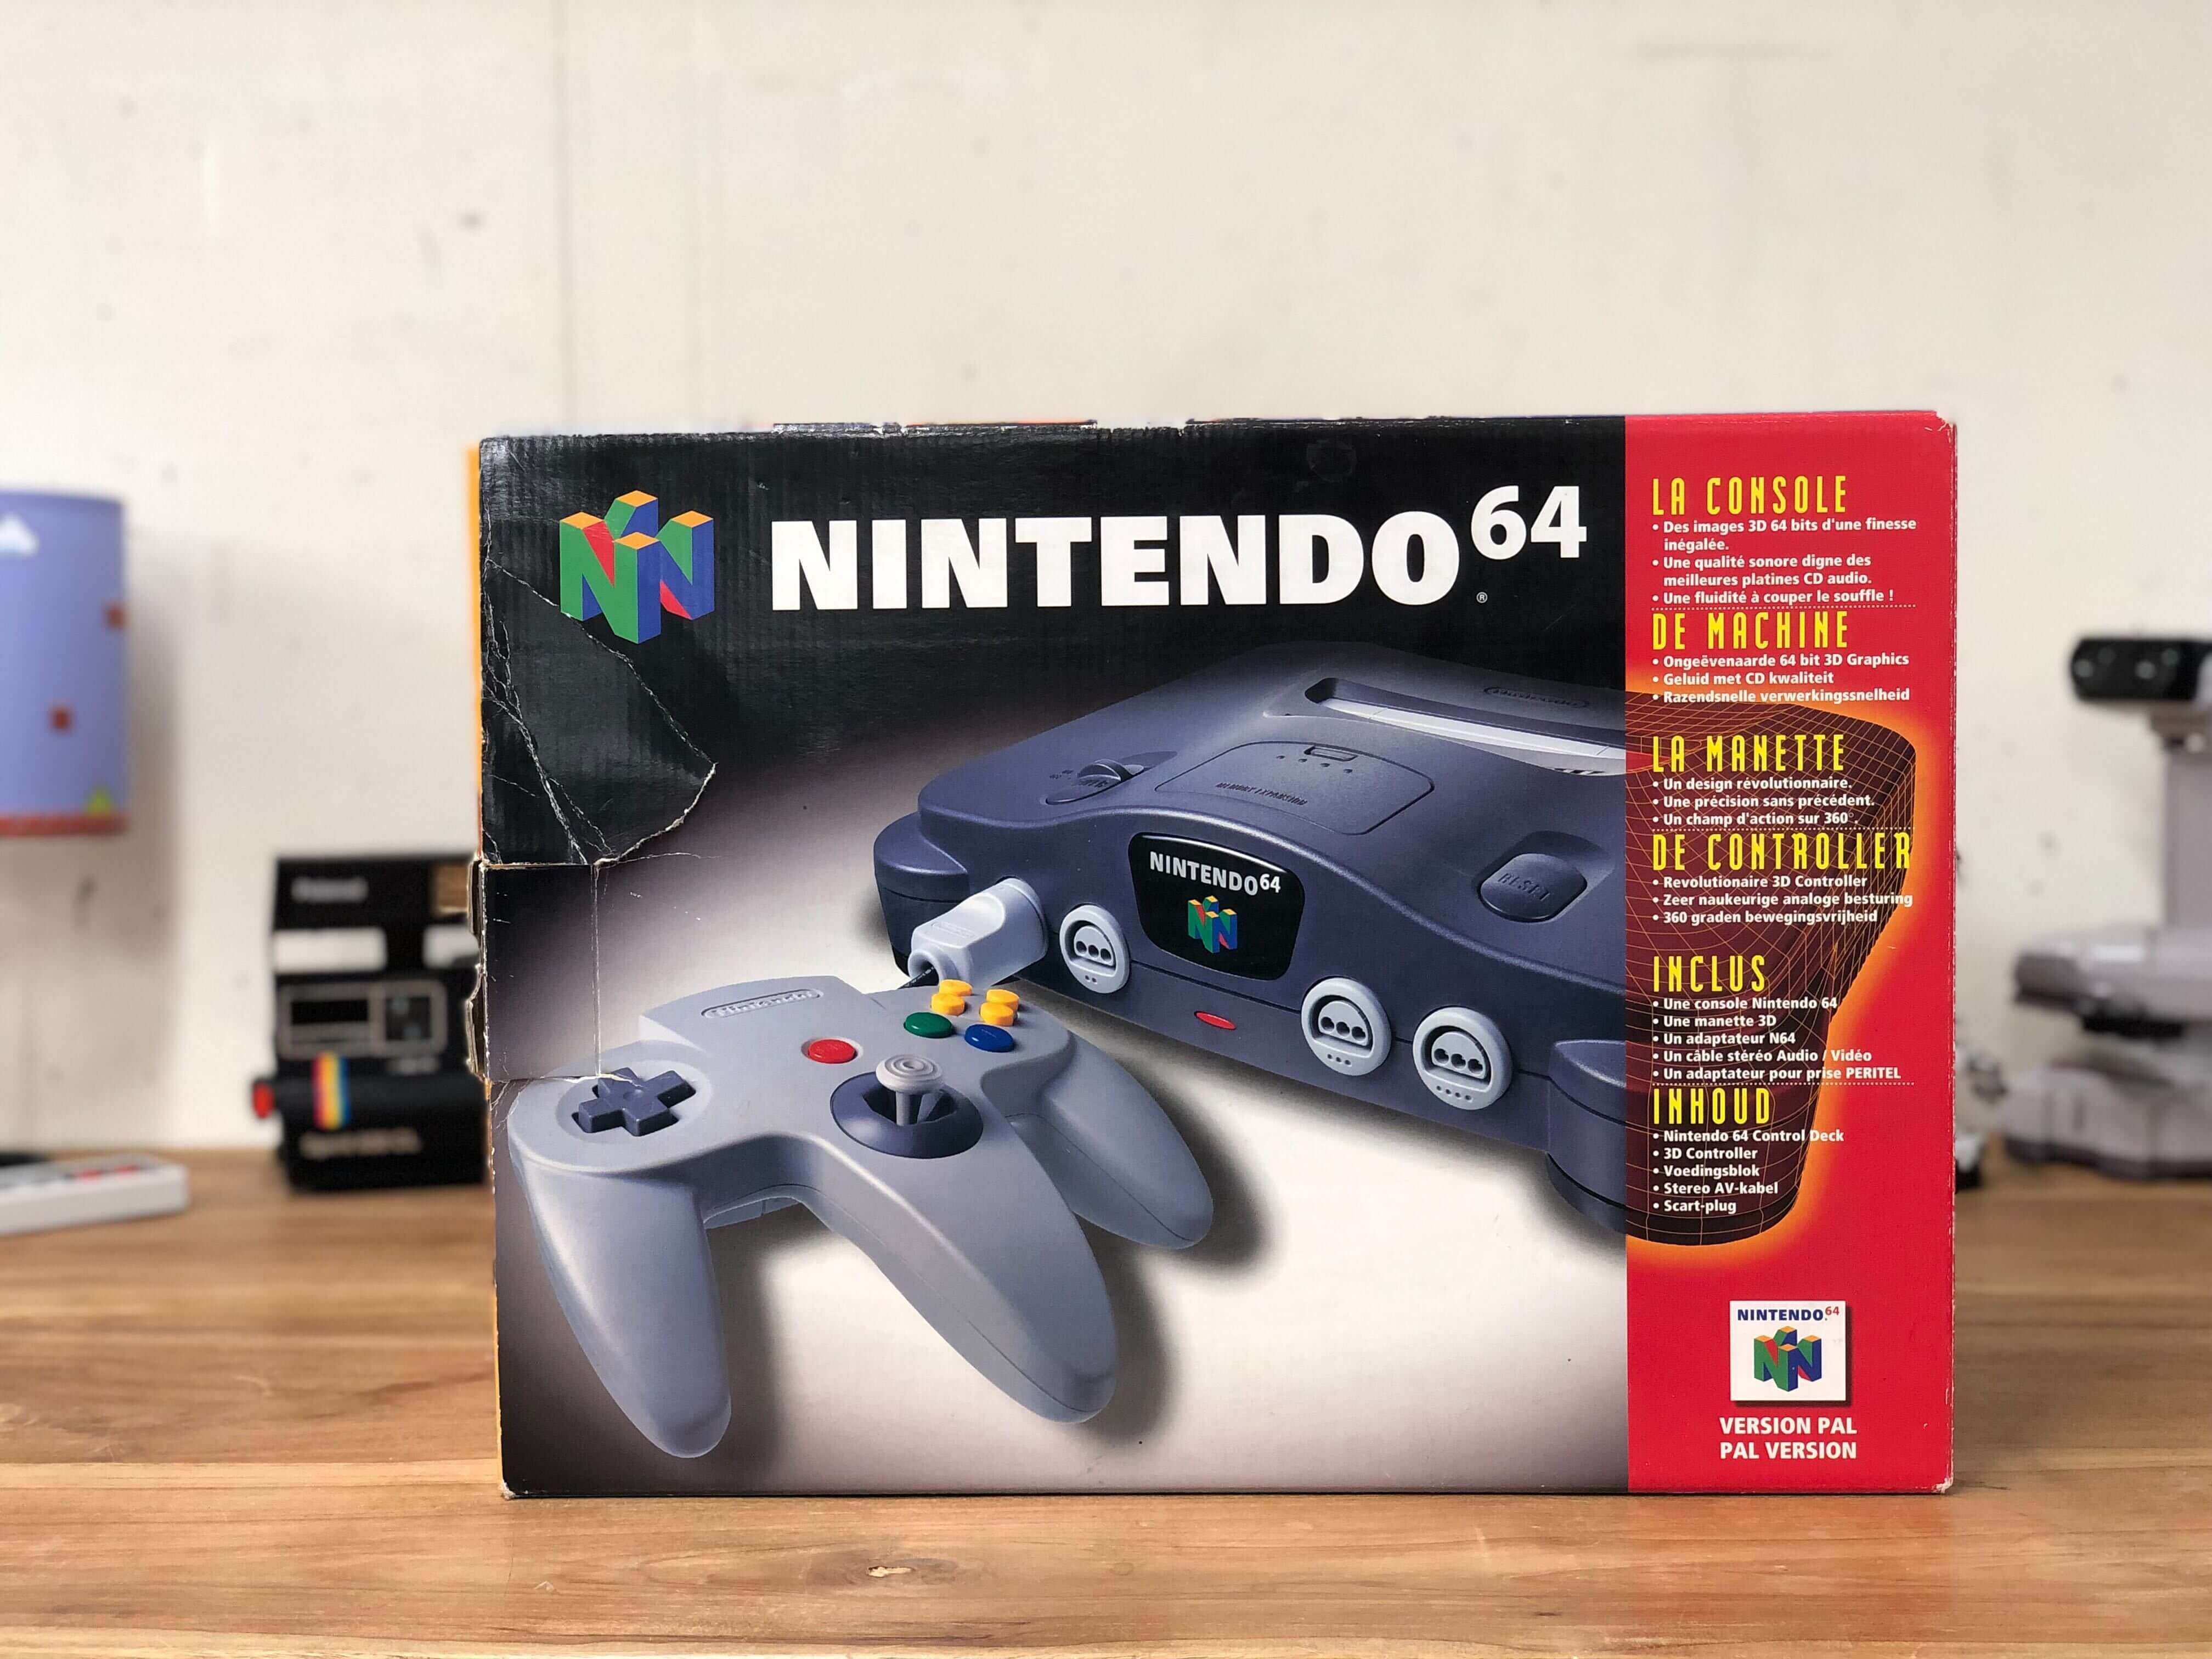 Nintendo 64 Starter Pack - Control Deck Edition [Complete] - Nintendo 64 Hardware